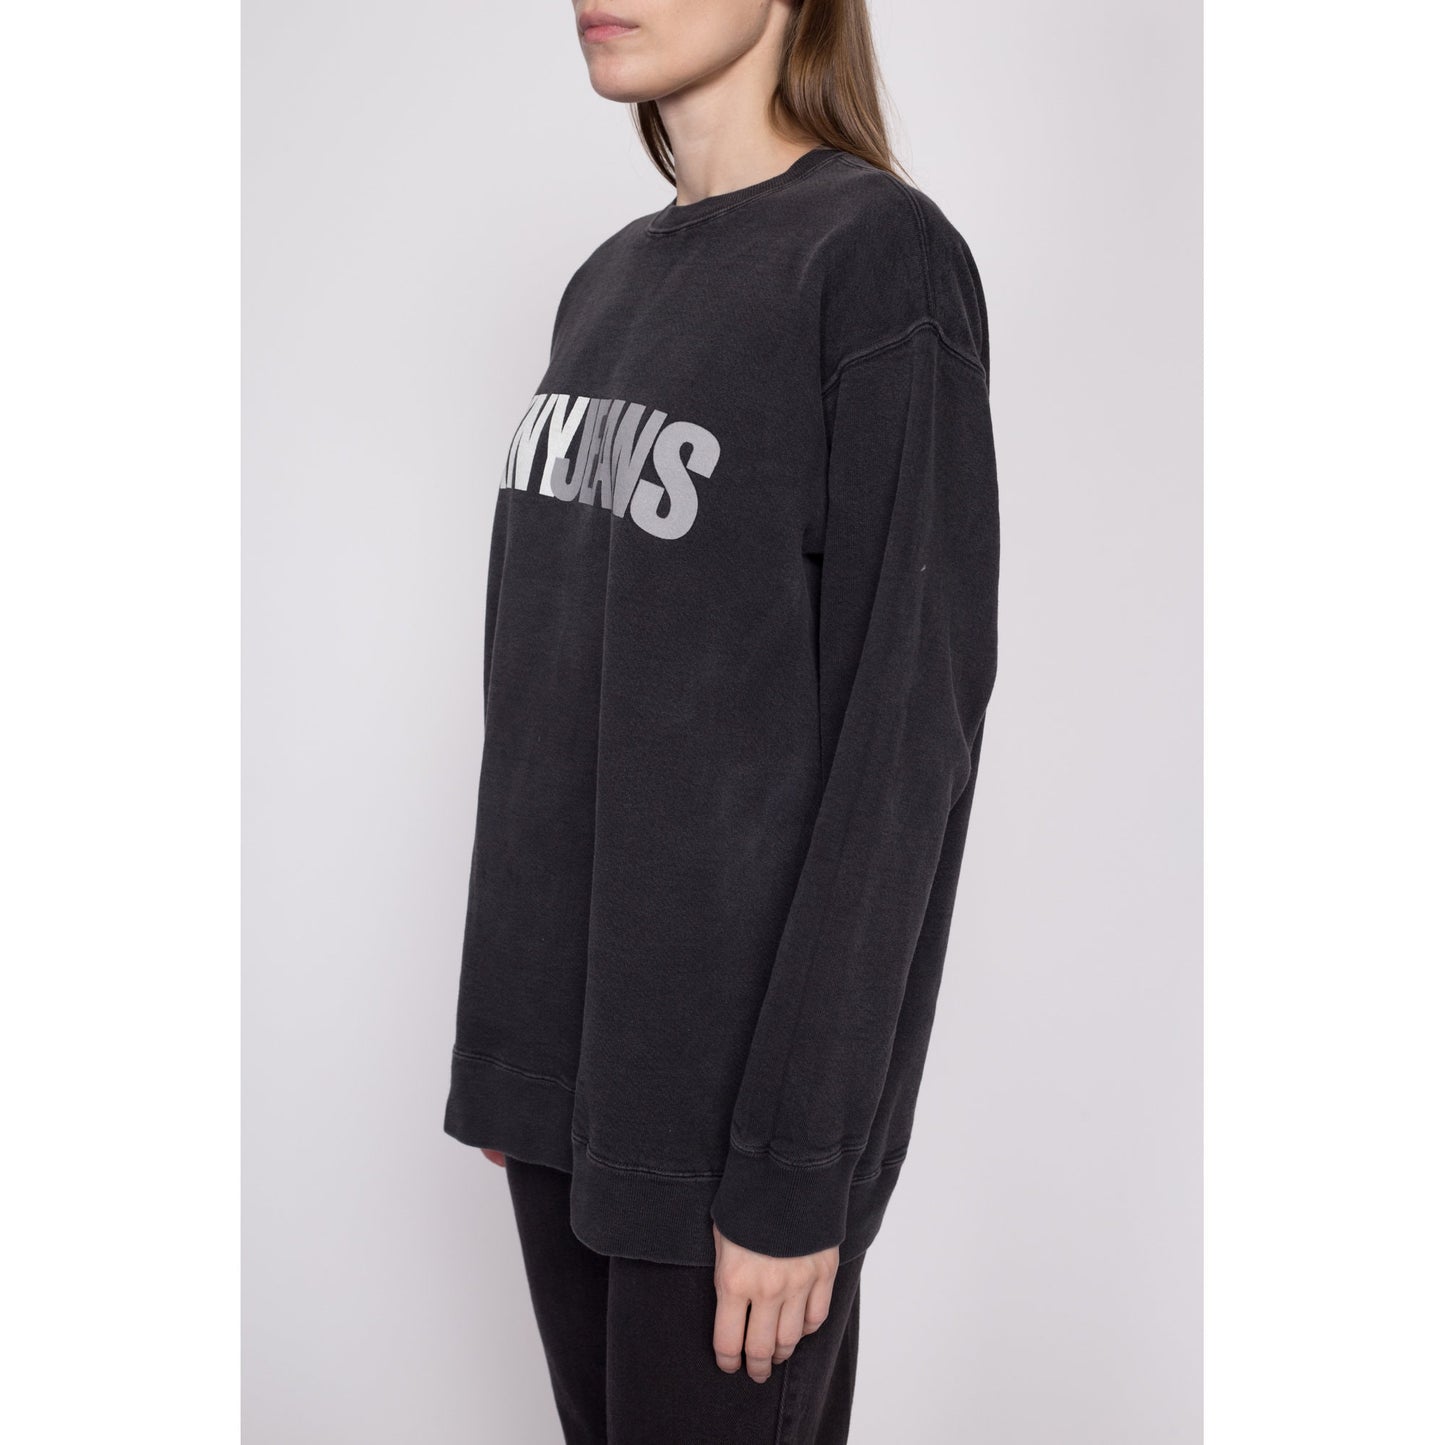 One Size 90s DKNY Jeans Black Crewneck Sweatshirt | Vintage Spell Out Big Logo Oversize Pullover